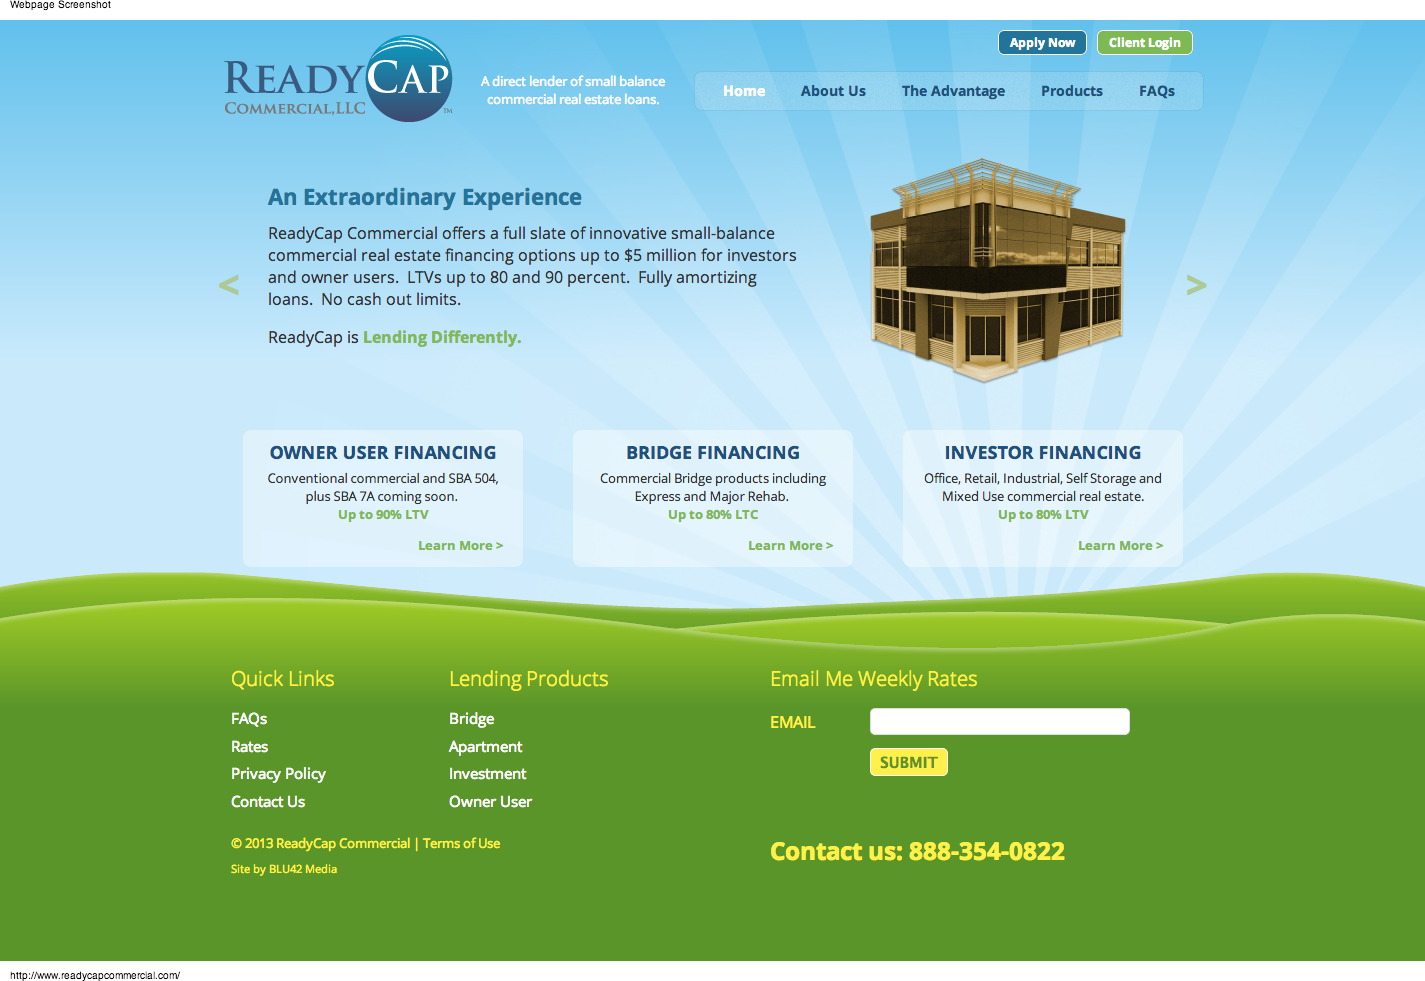 ReadyCap Commercial (BLU42 Media)